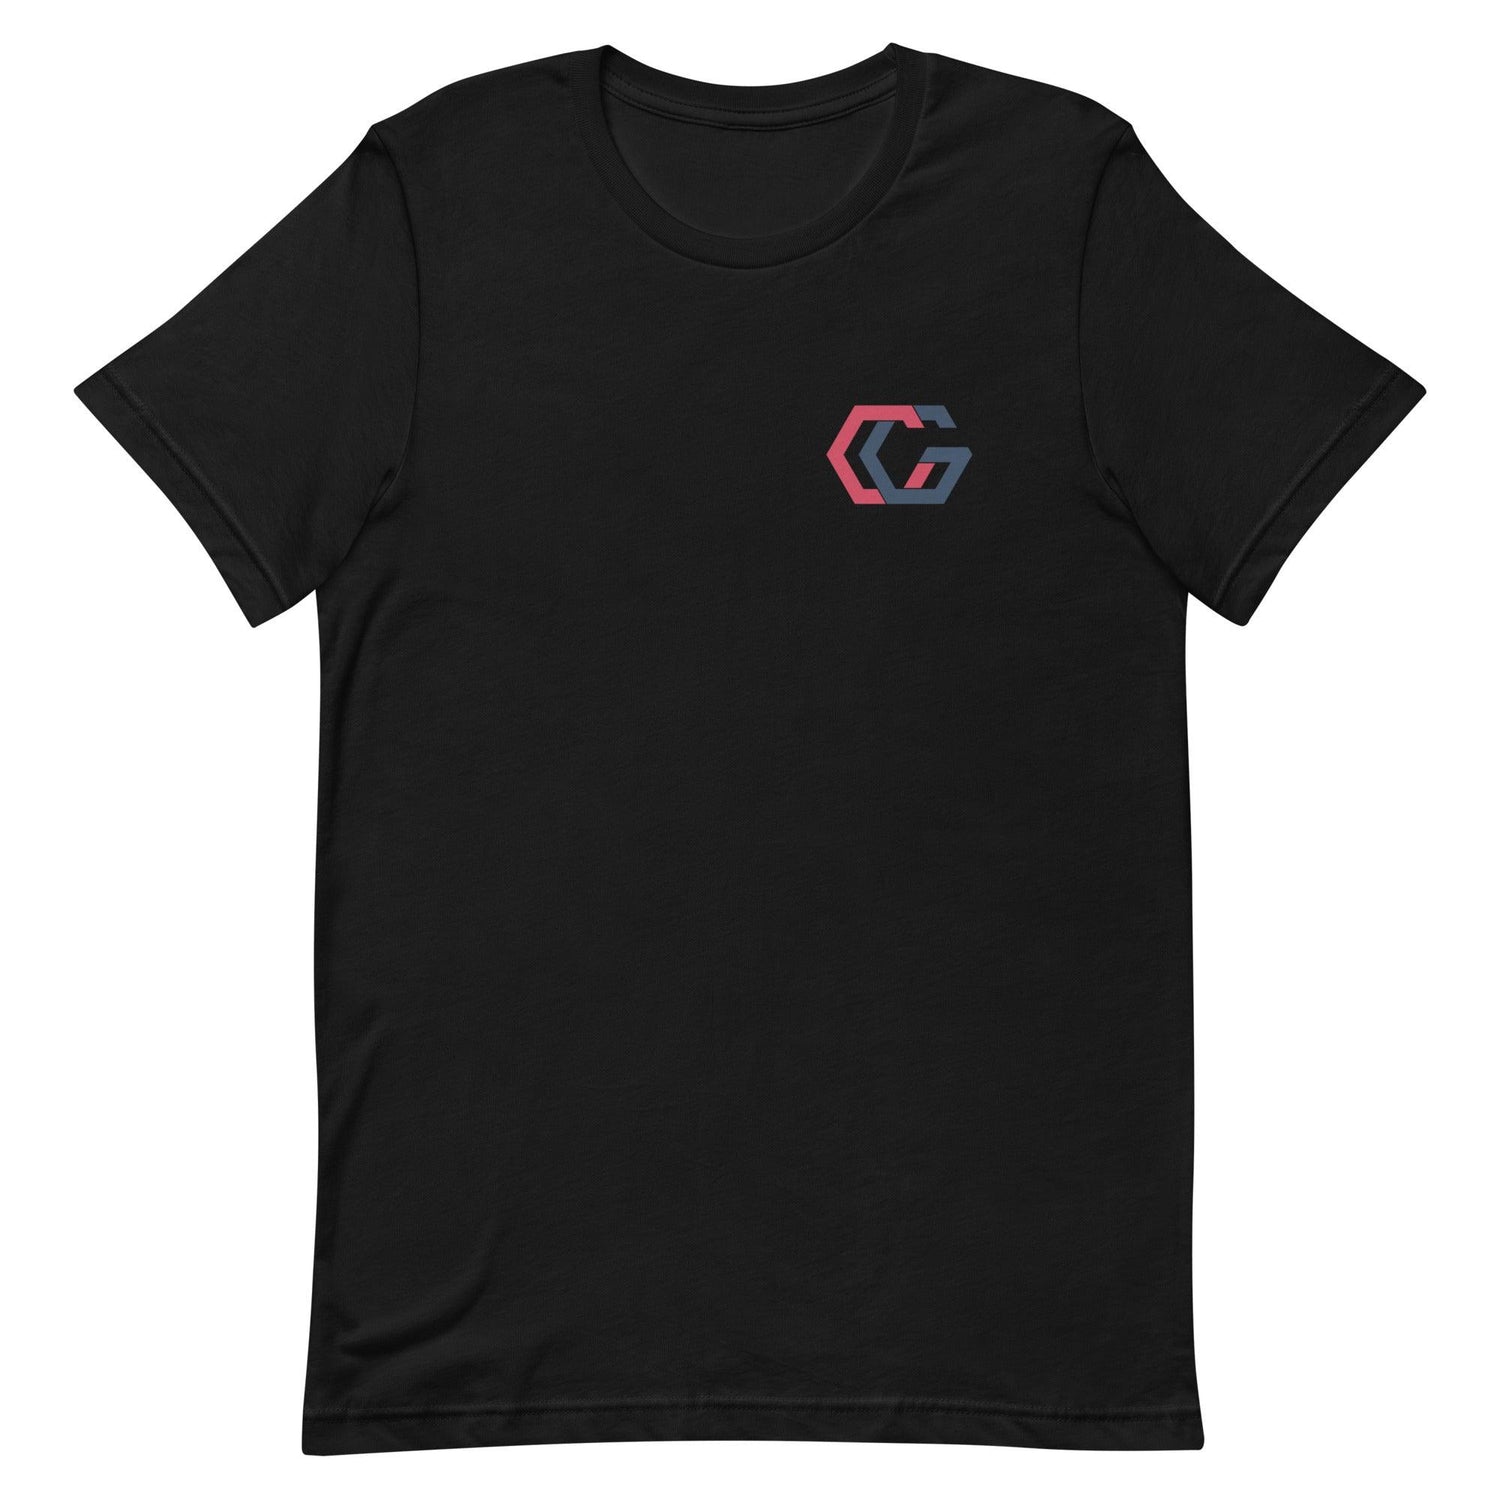 Chris Gerard “CG” t-shirt - Fan Arch